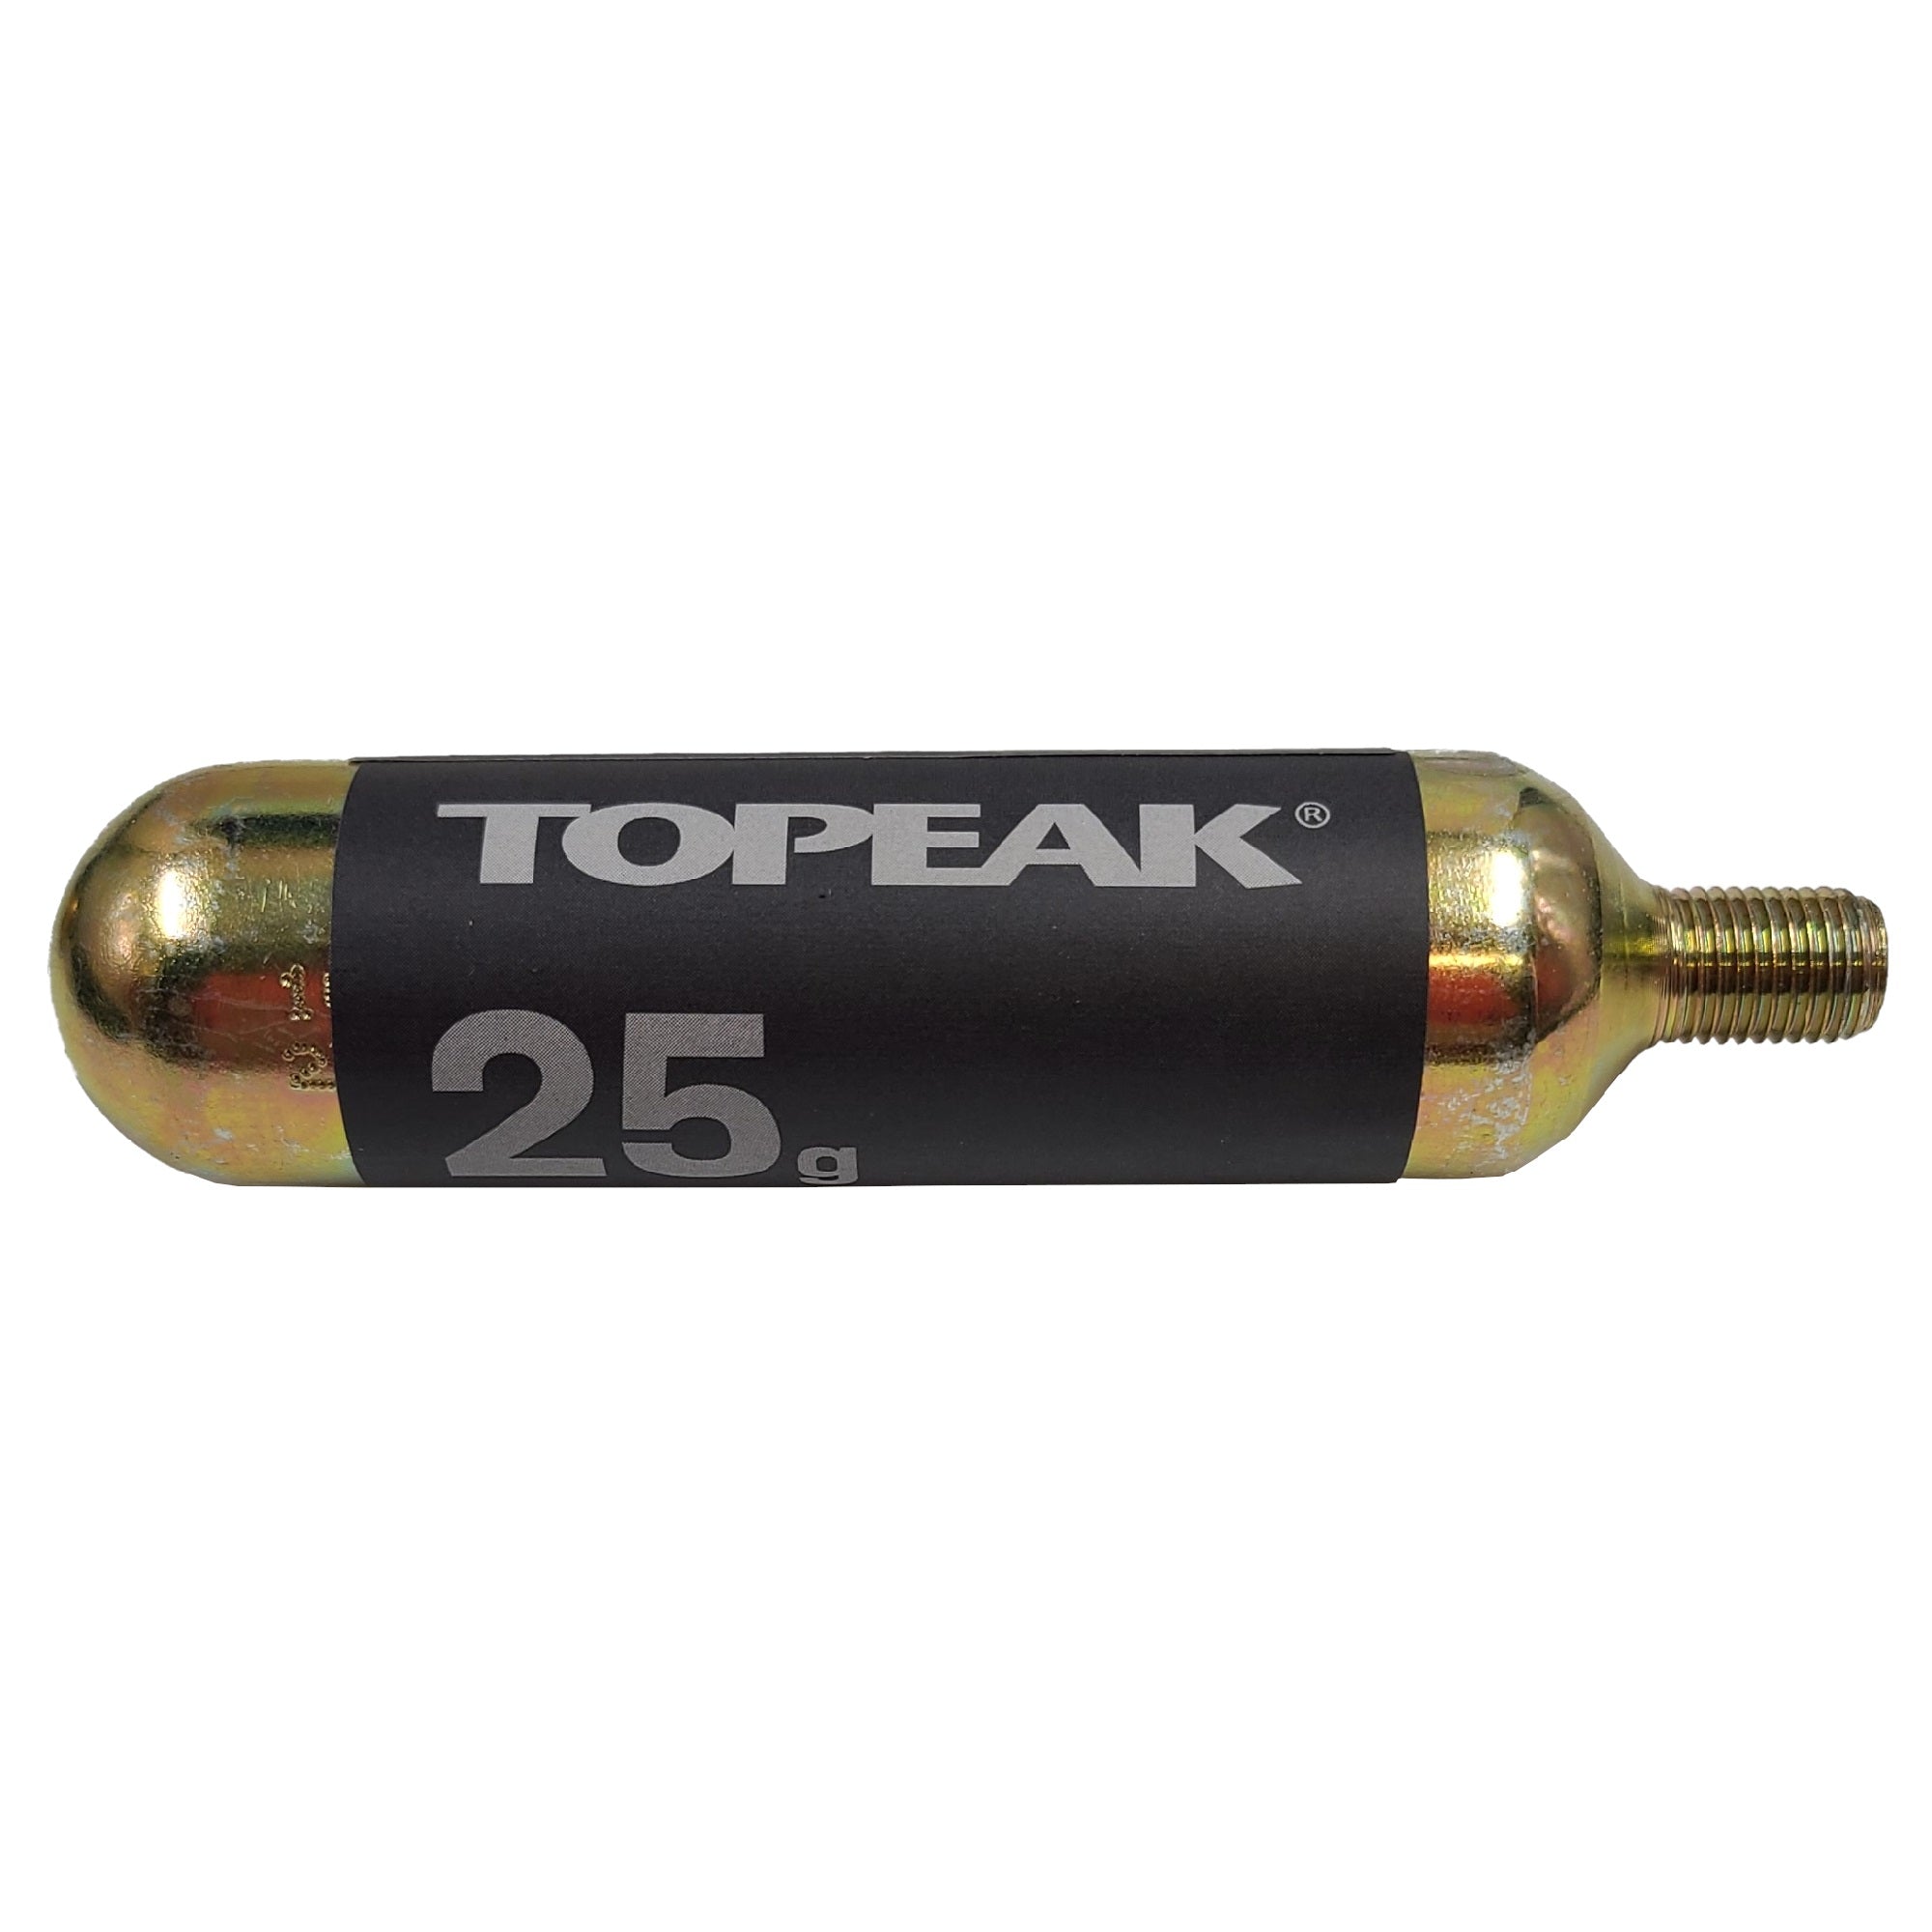 Topeak TUB-MSX Tubi Master X Tubeless Tire Flat Repair Kit with 25g CO2 Cartridge - The Bikesmiths